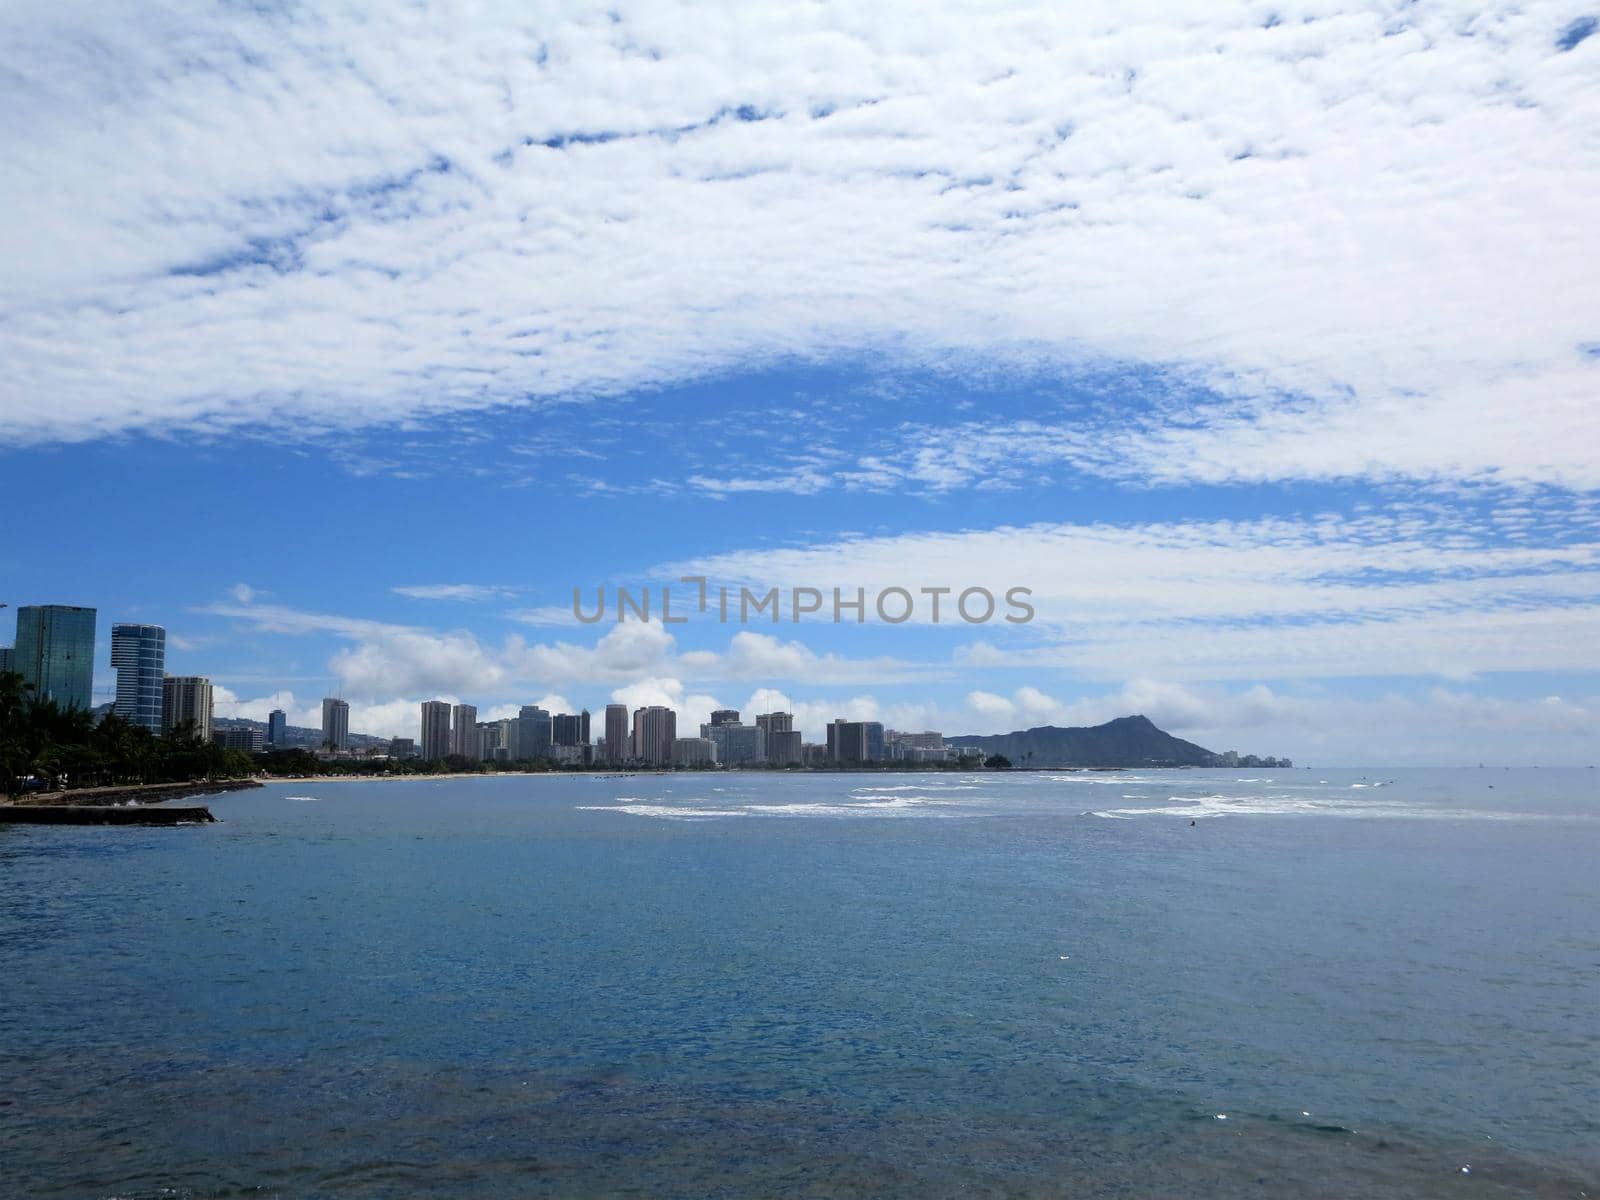 Ala Moana Beach Park with buildings of Honolulu, Waikiki and iconic Diamondhead in the distance during a beautiful day on the island of Oahu, Hawaii.